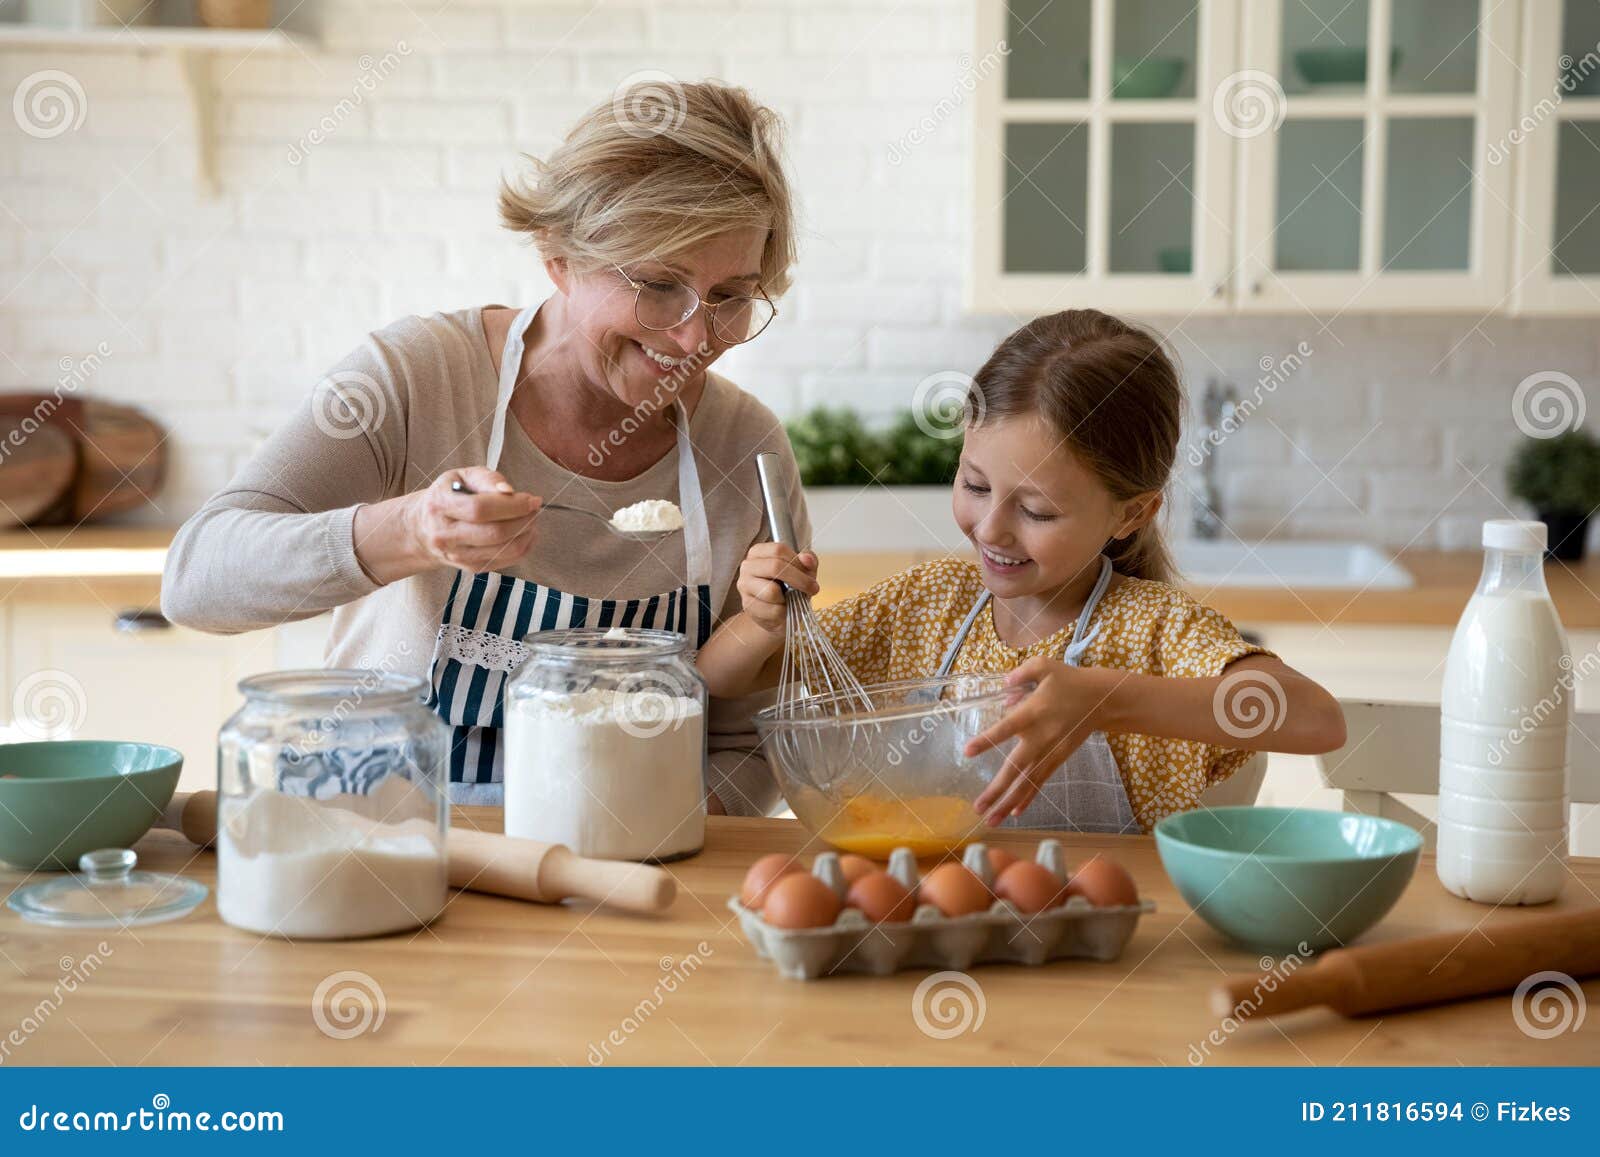 happy little girl help senior grandma at kitchen mix dough